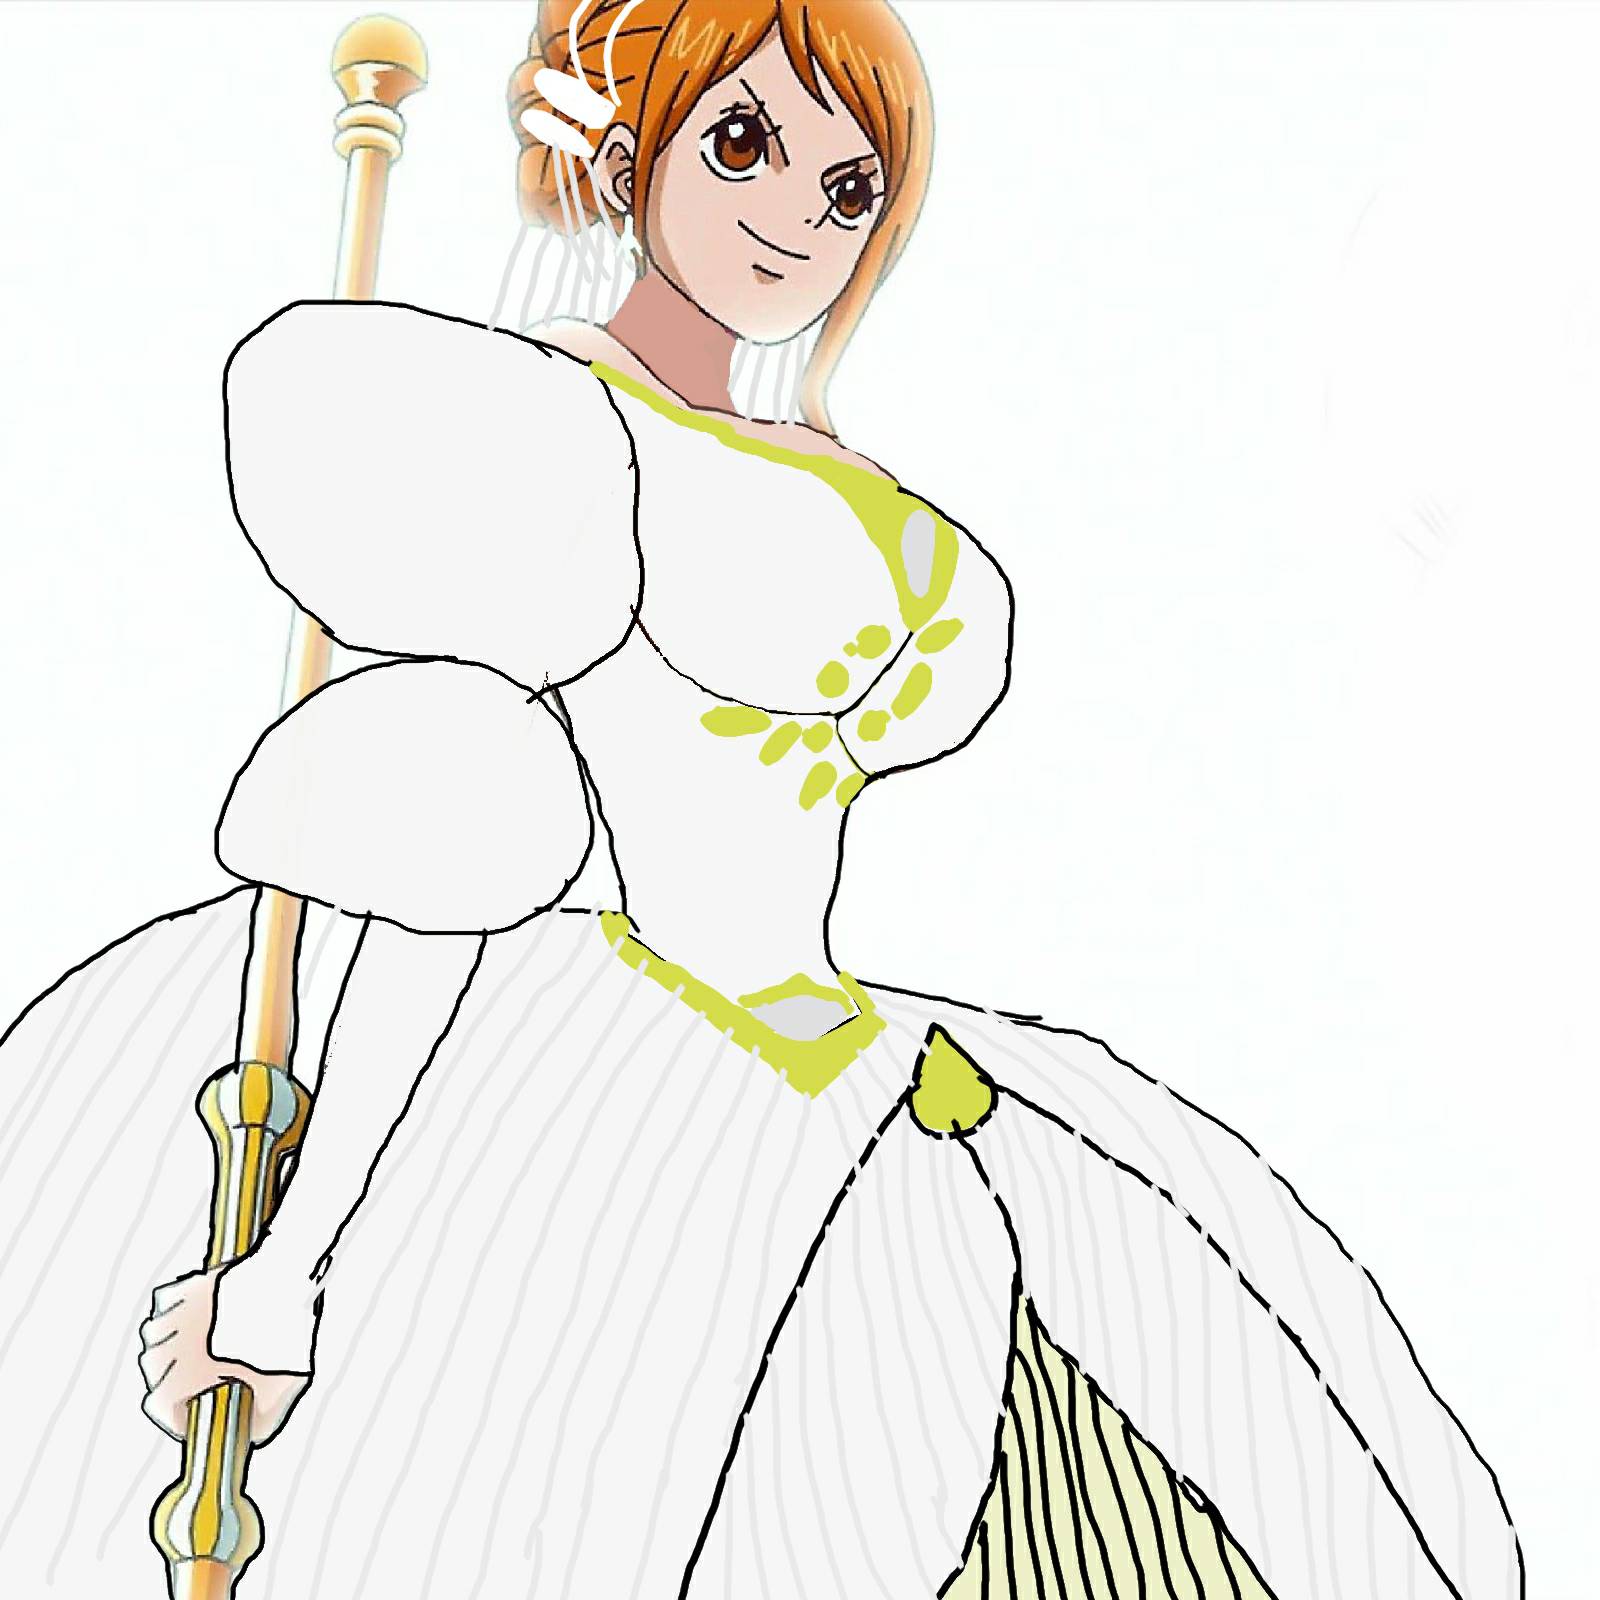 Nami as Yuri Tanima in her Wedding Dress by EmperorRoku on DeviantArt